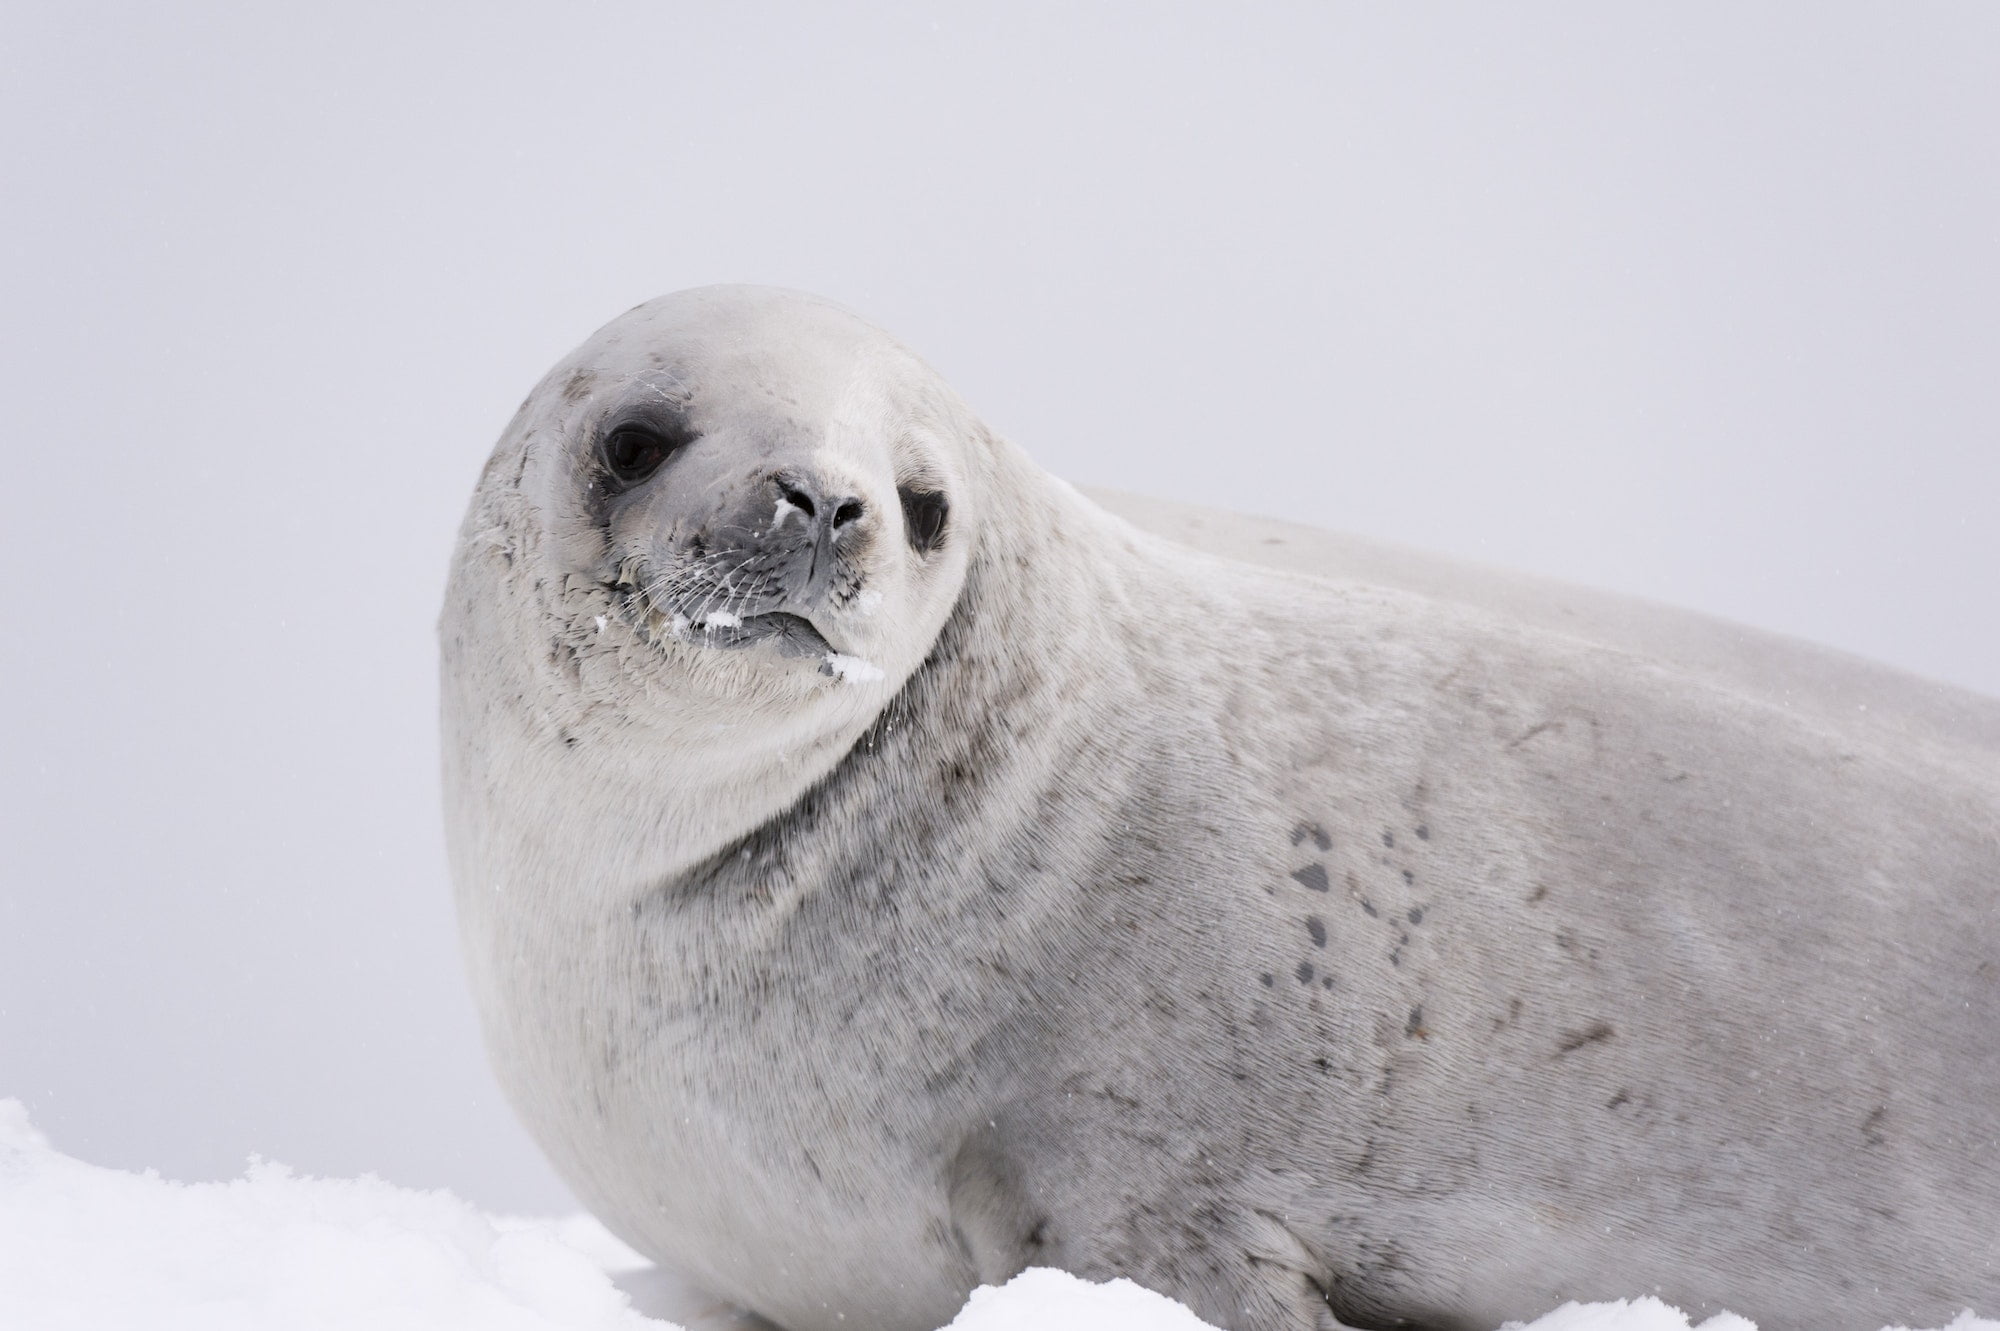 Crabeater seal (Lobodon carcinophaga) on the ice, Wilhelmina Bay, Antarctica